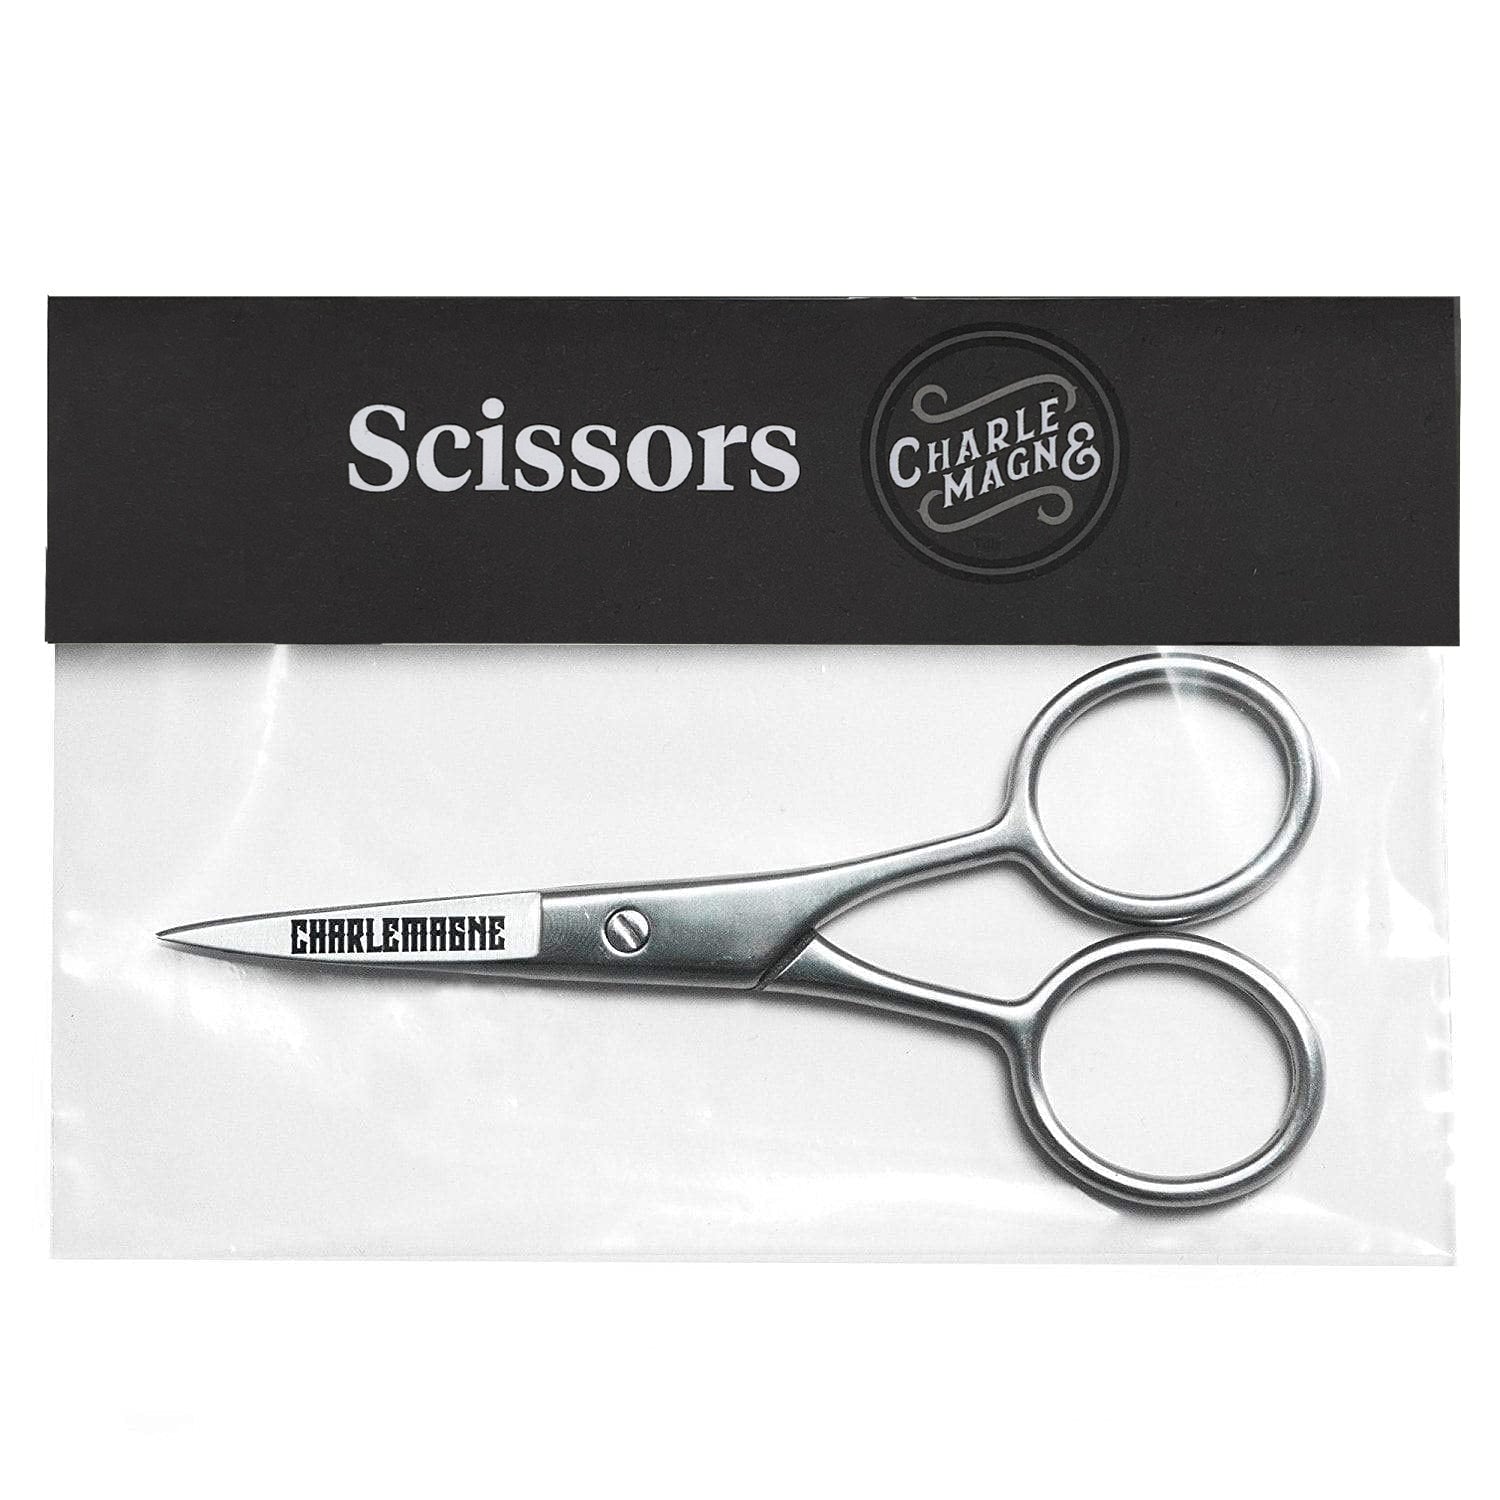 Beard scissors 